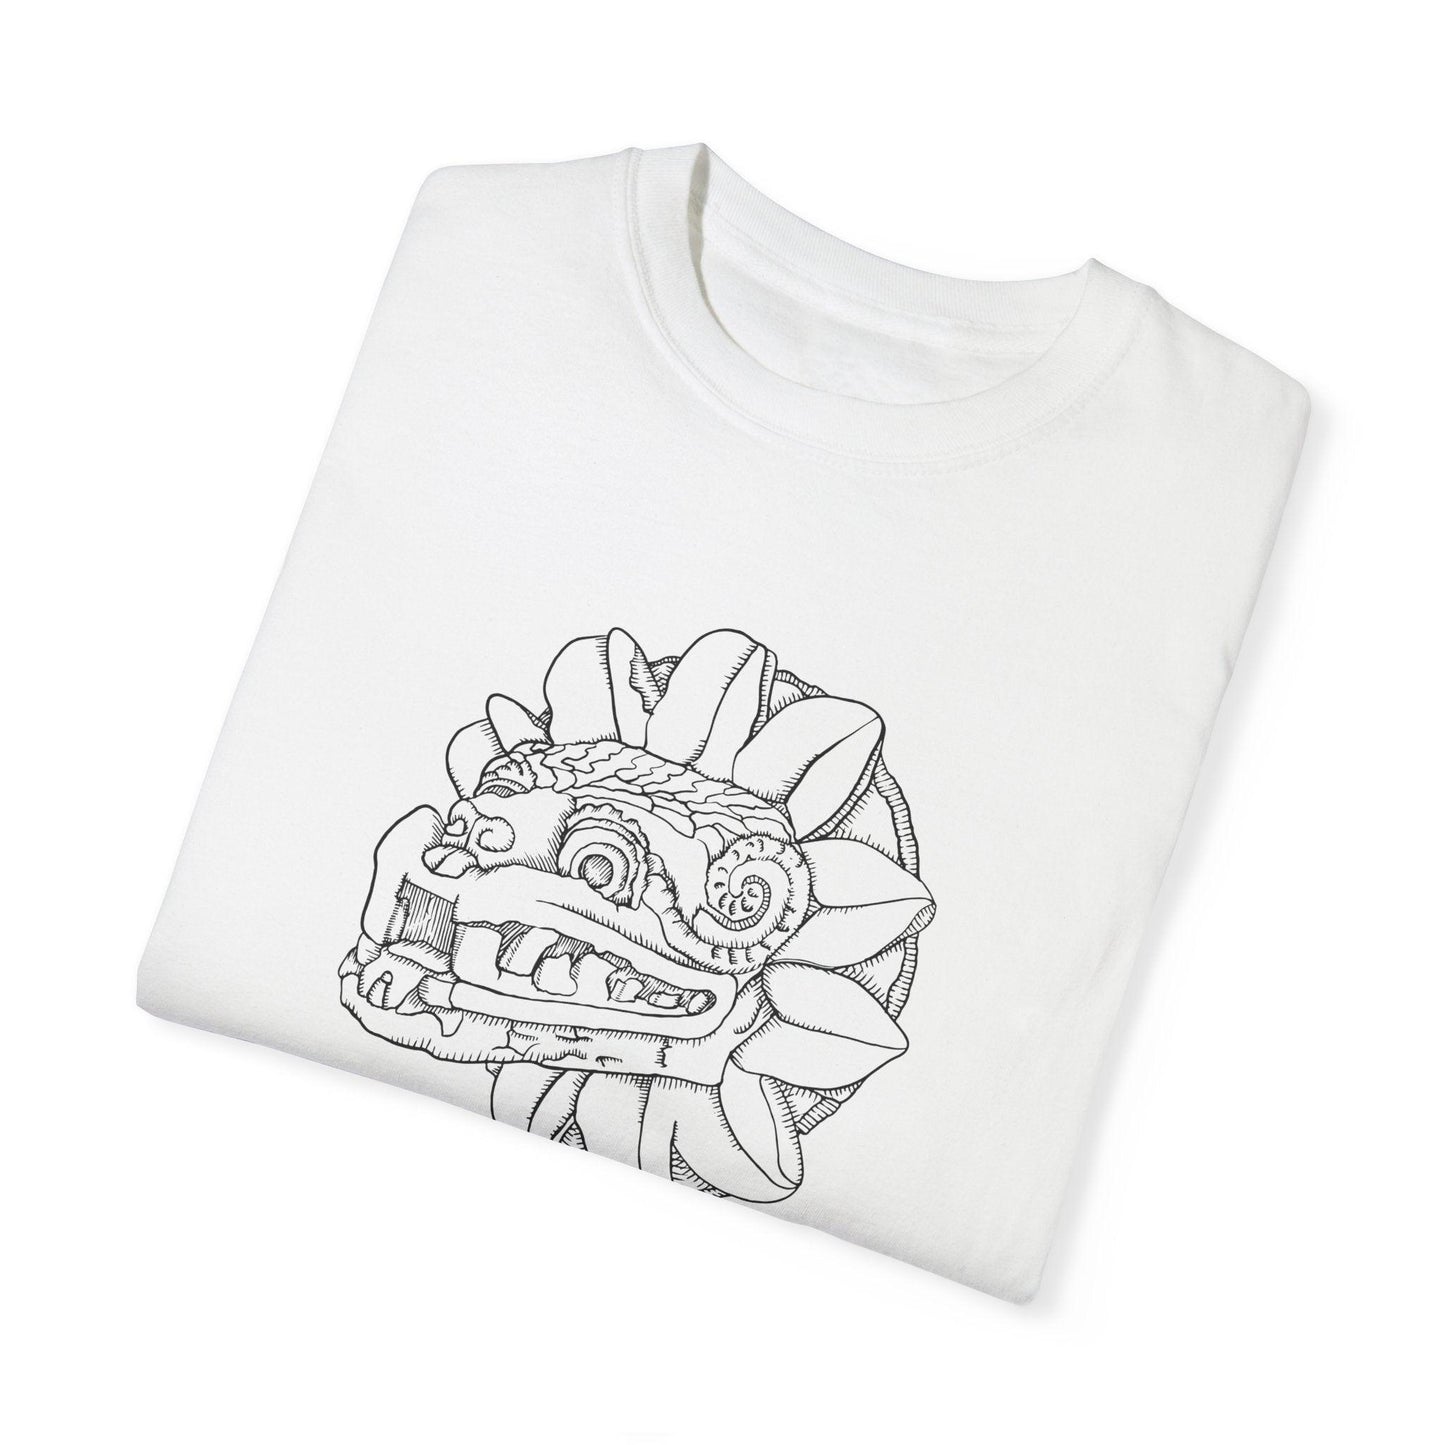 Quetzacoatl Aztec Snake Premium Aztec Drawn T-shirt - Animal Instinctive